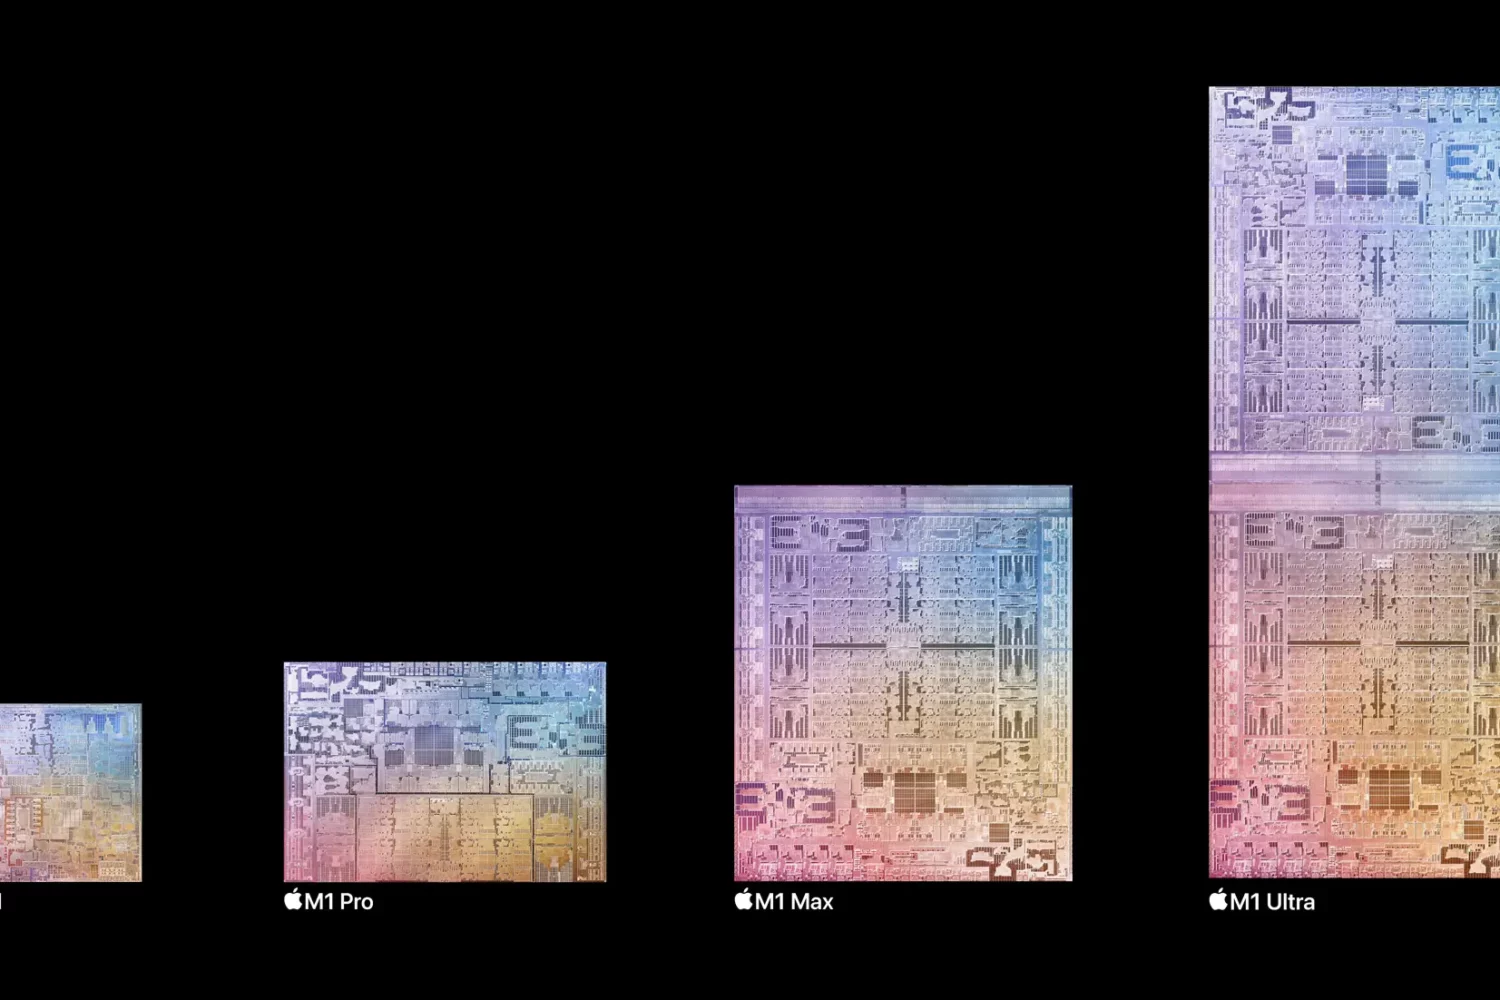 Apple's marketing image showcasing each chip in the M1 family, left to right: M1, M1 Pro, M1 Max and M1 Ultra